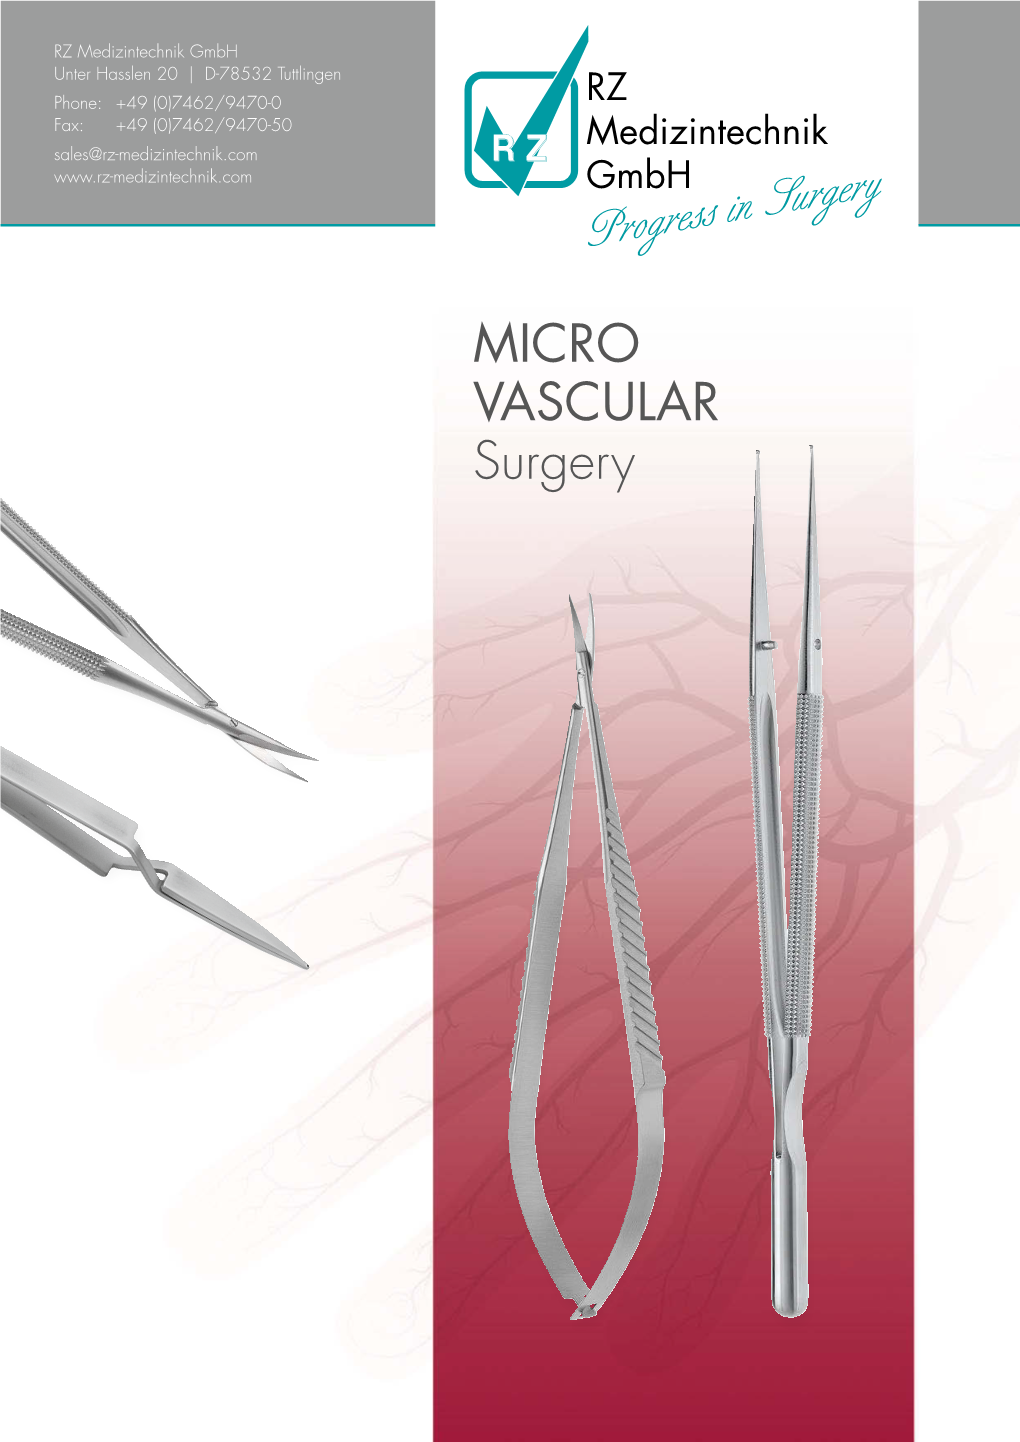 MICRO VASCULAR Surgery